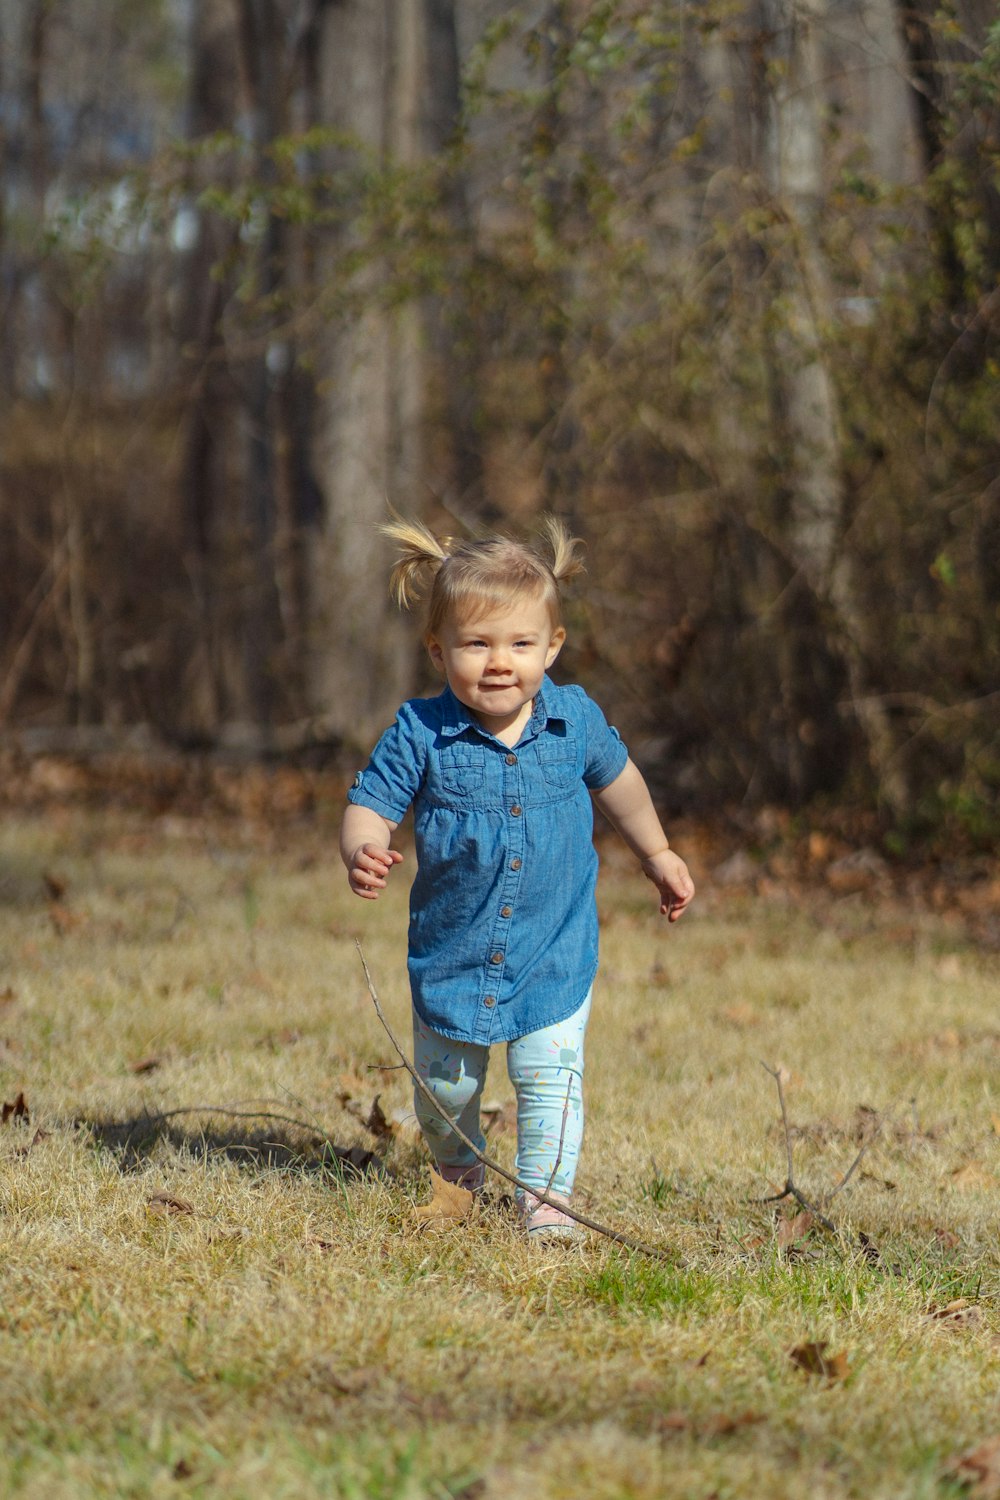 a little girl running through a field with a frisbee